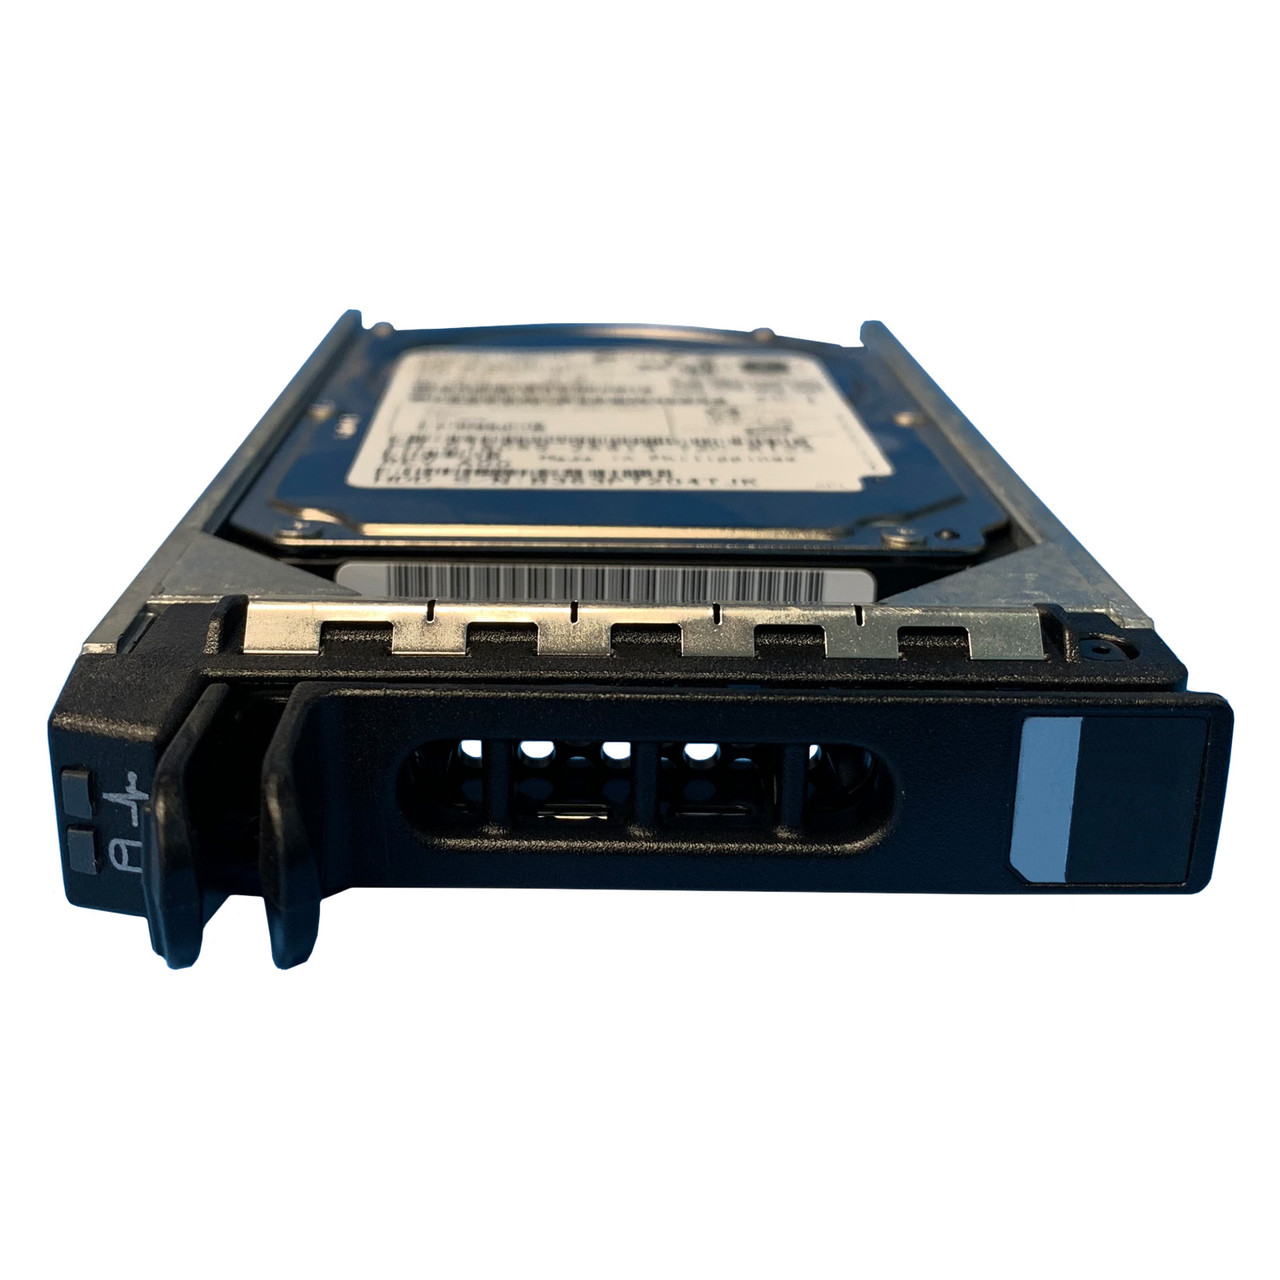 New Dell PowerEdge 2950 300GB 10K SATA 2.5" Hard Drive 1 Year Warranty 